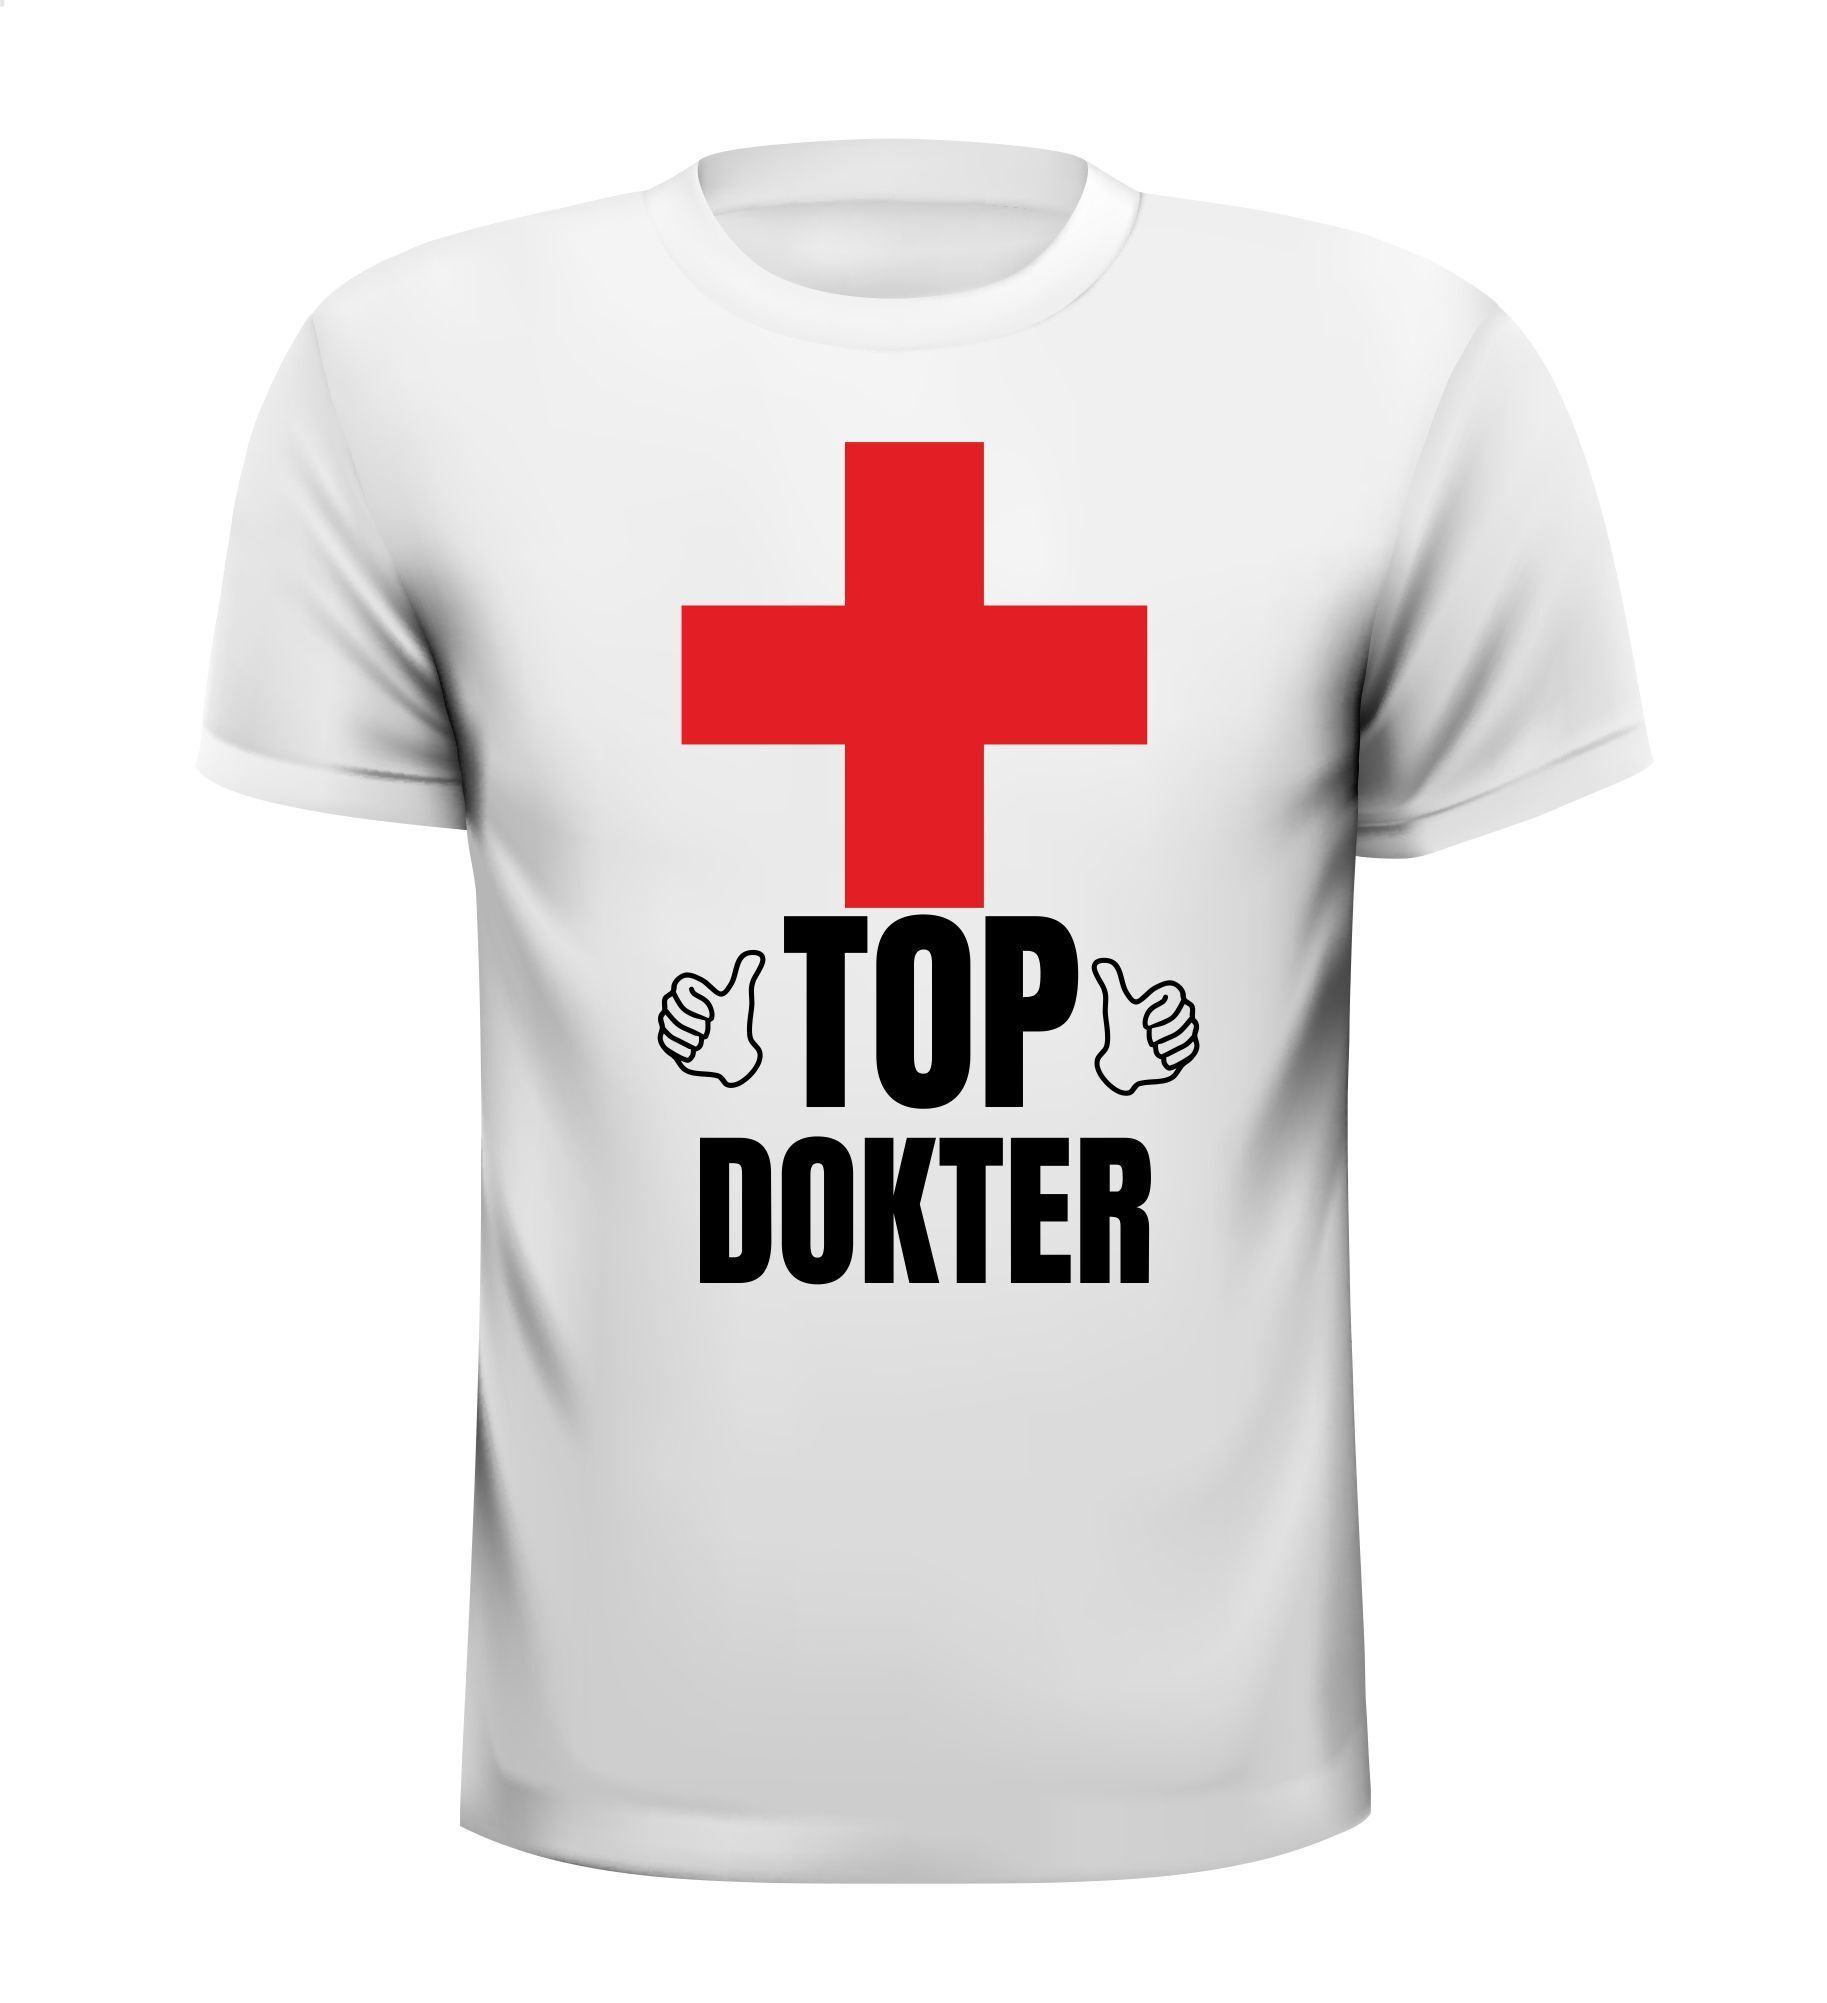 T-shirt top dokter cadeau bedankje coronavirus crisis